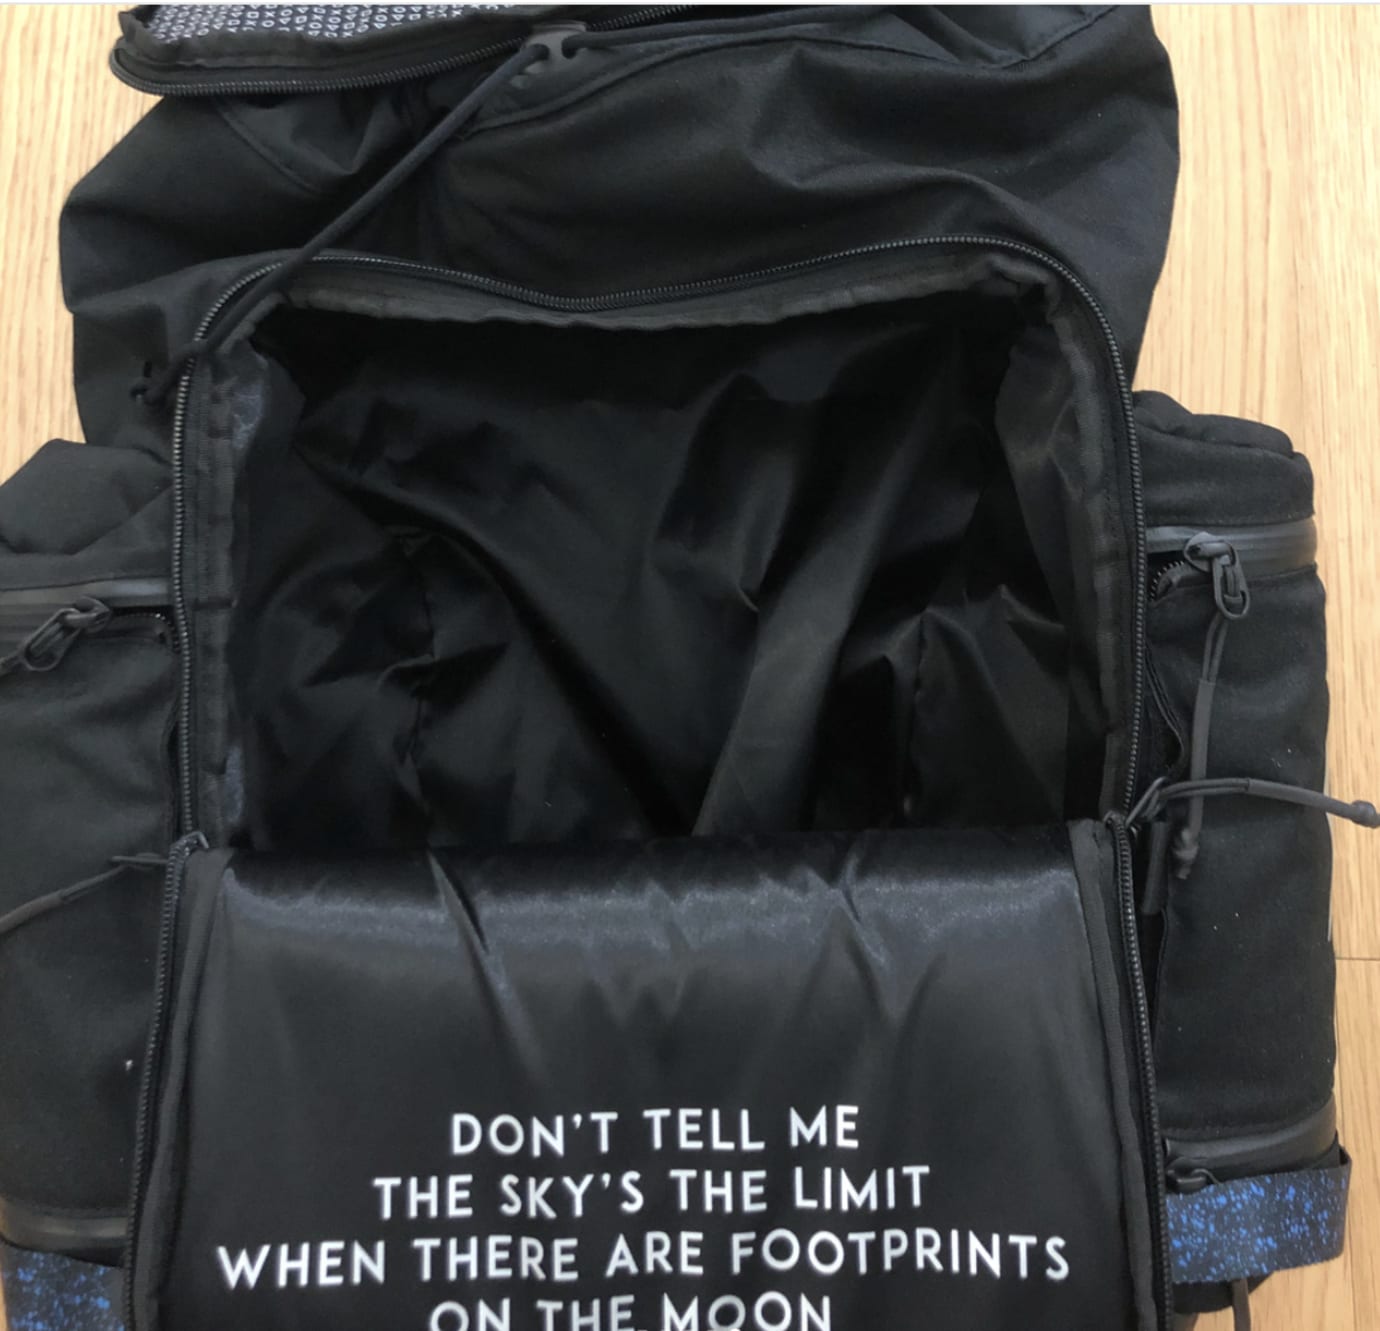 pg2 backpack